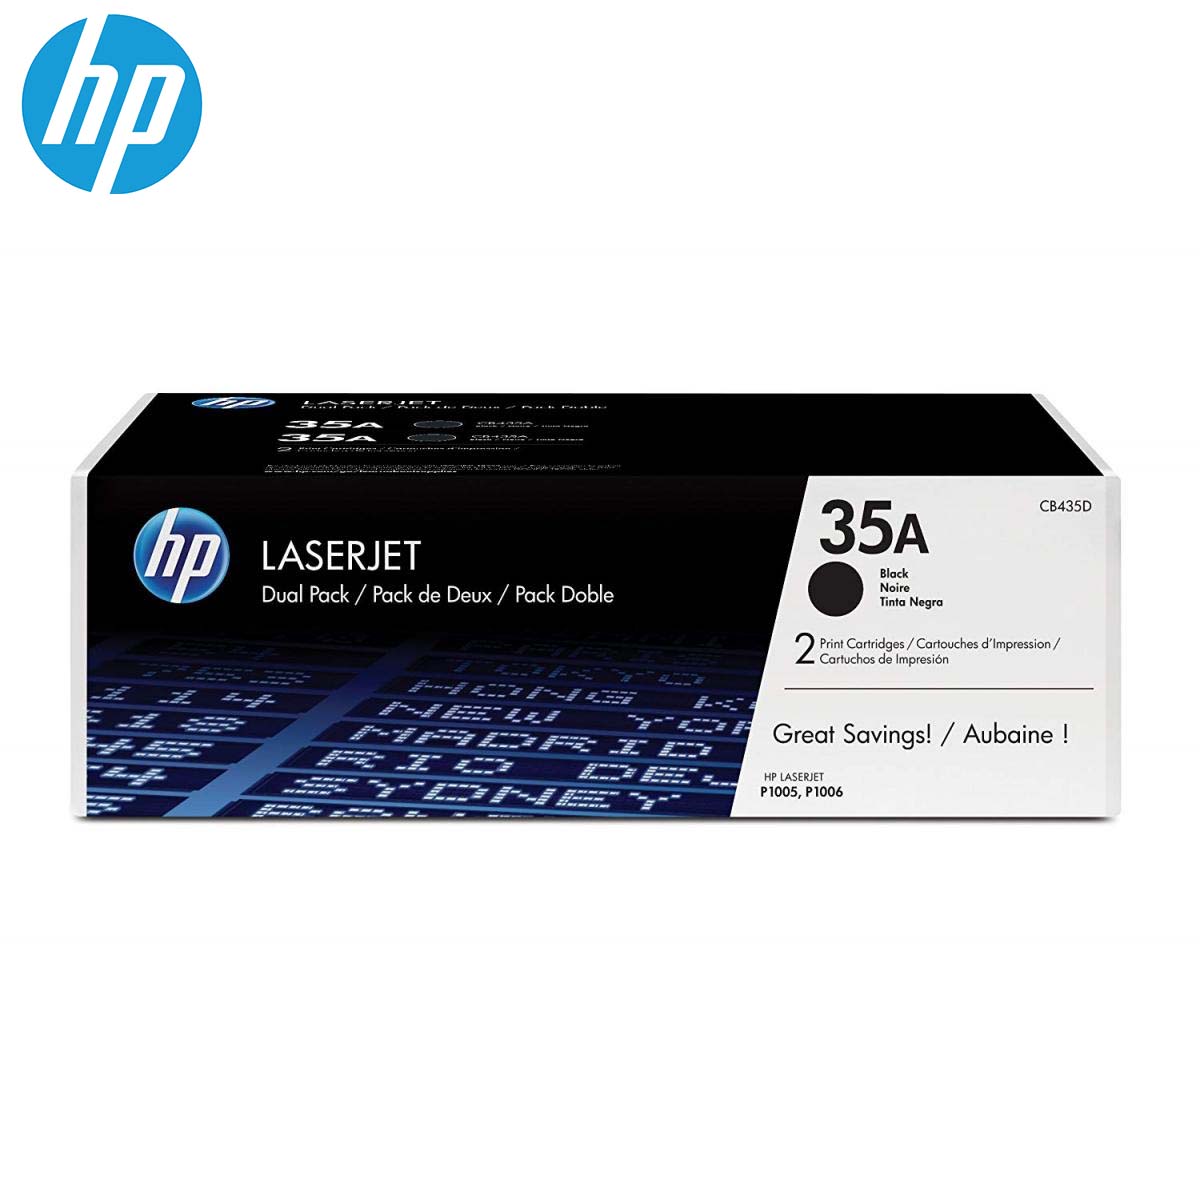 HP LaserJet CB435A Dual Pack Black Print Cartridges (Original)